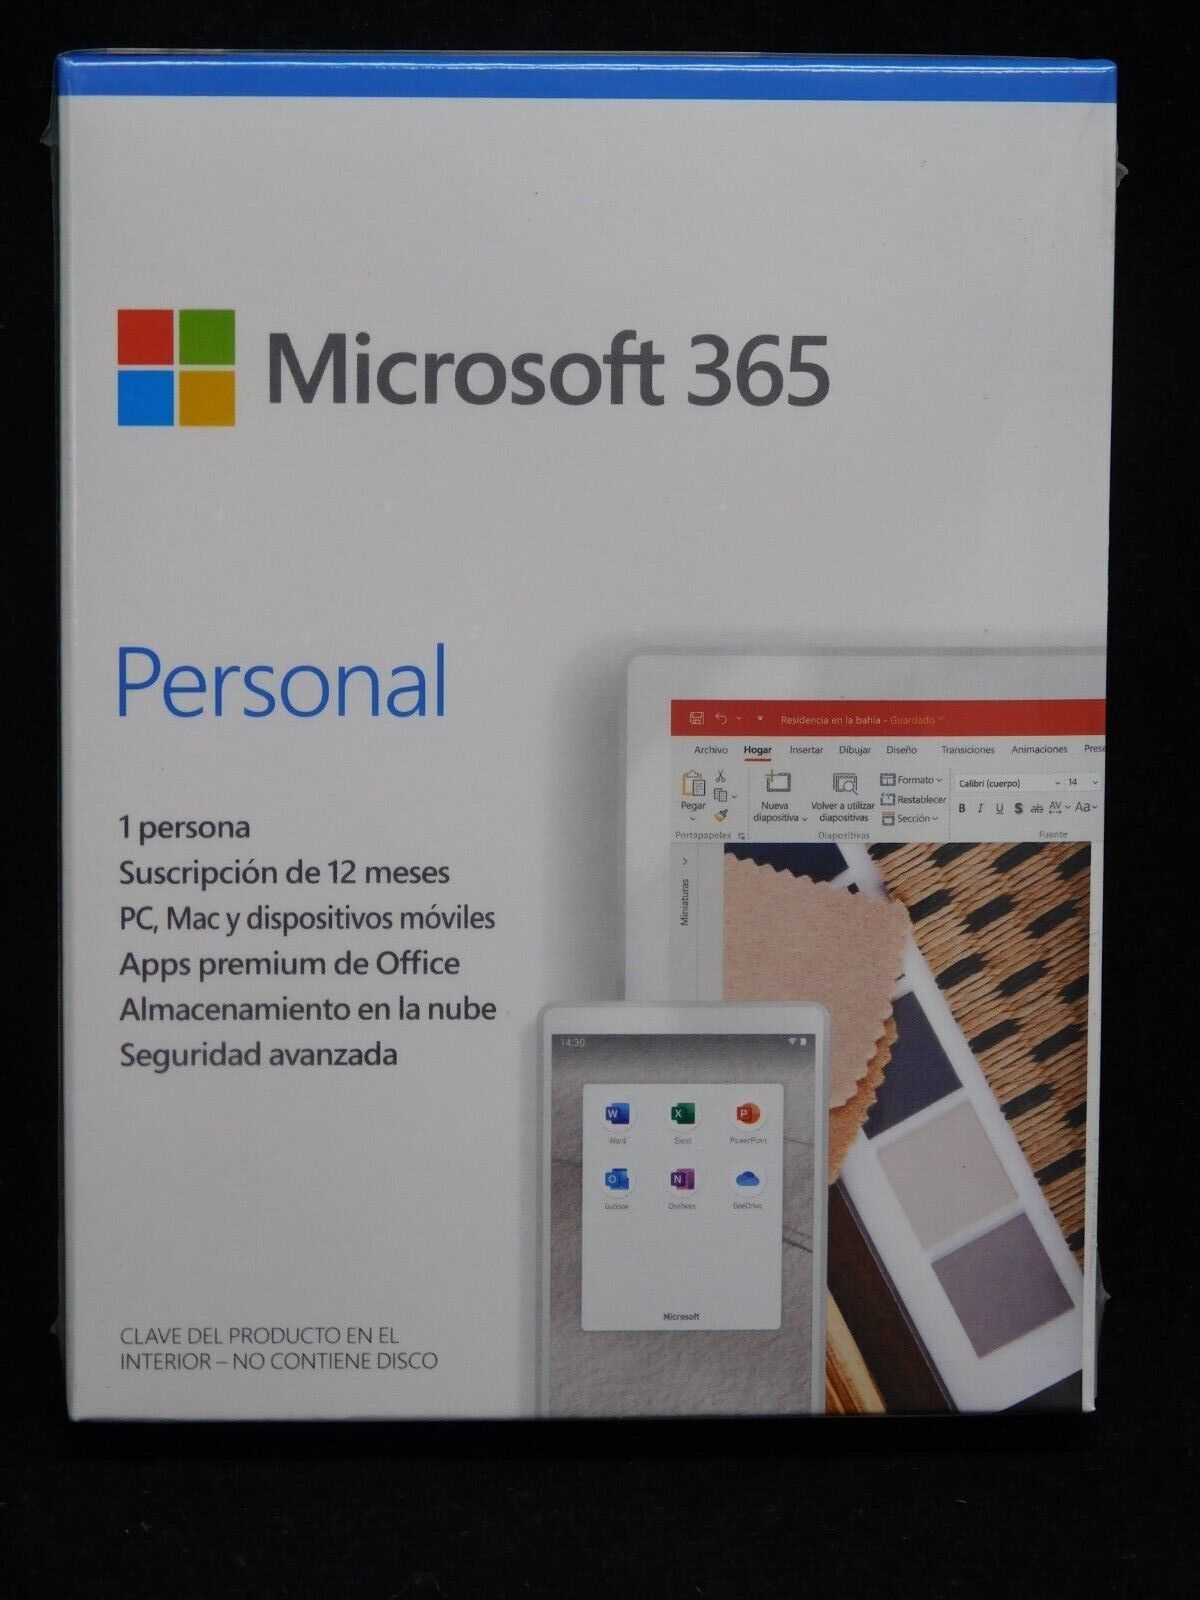 Microsoft  365 Personal  QQ2-01053  for PC/Mac  Latin America